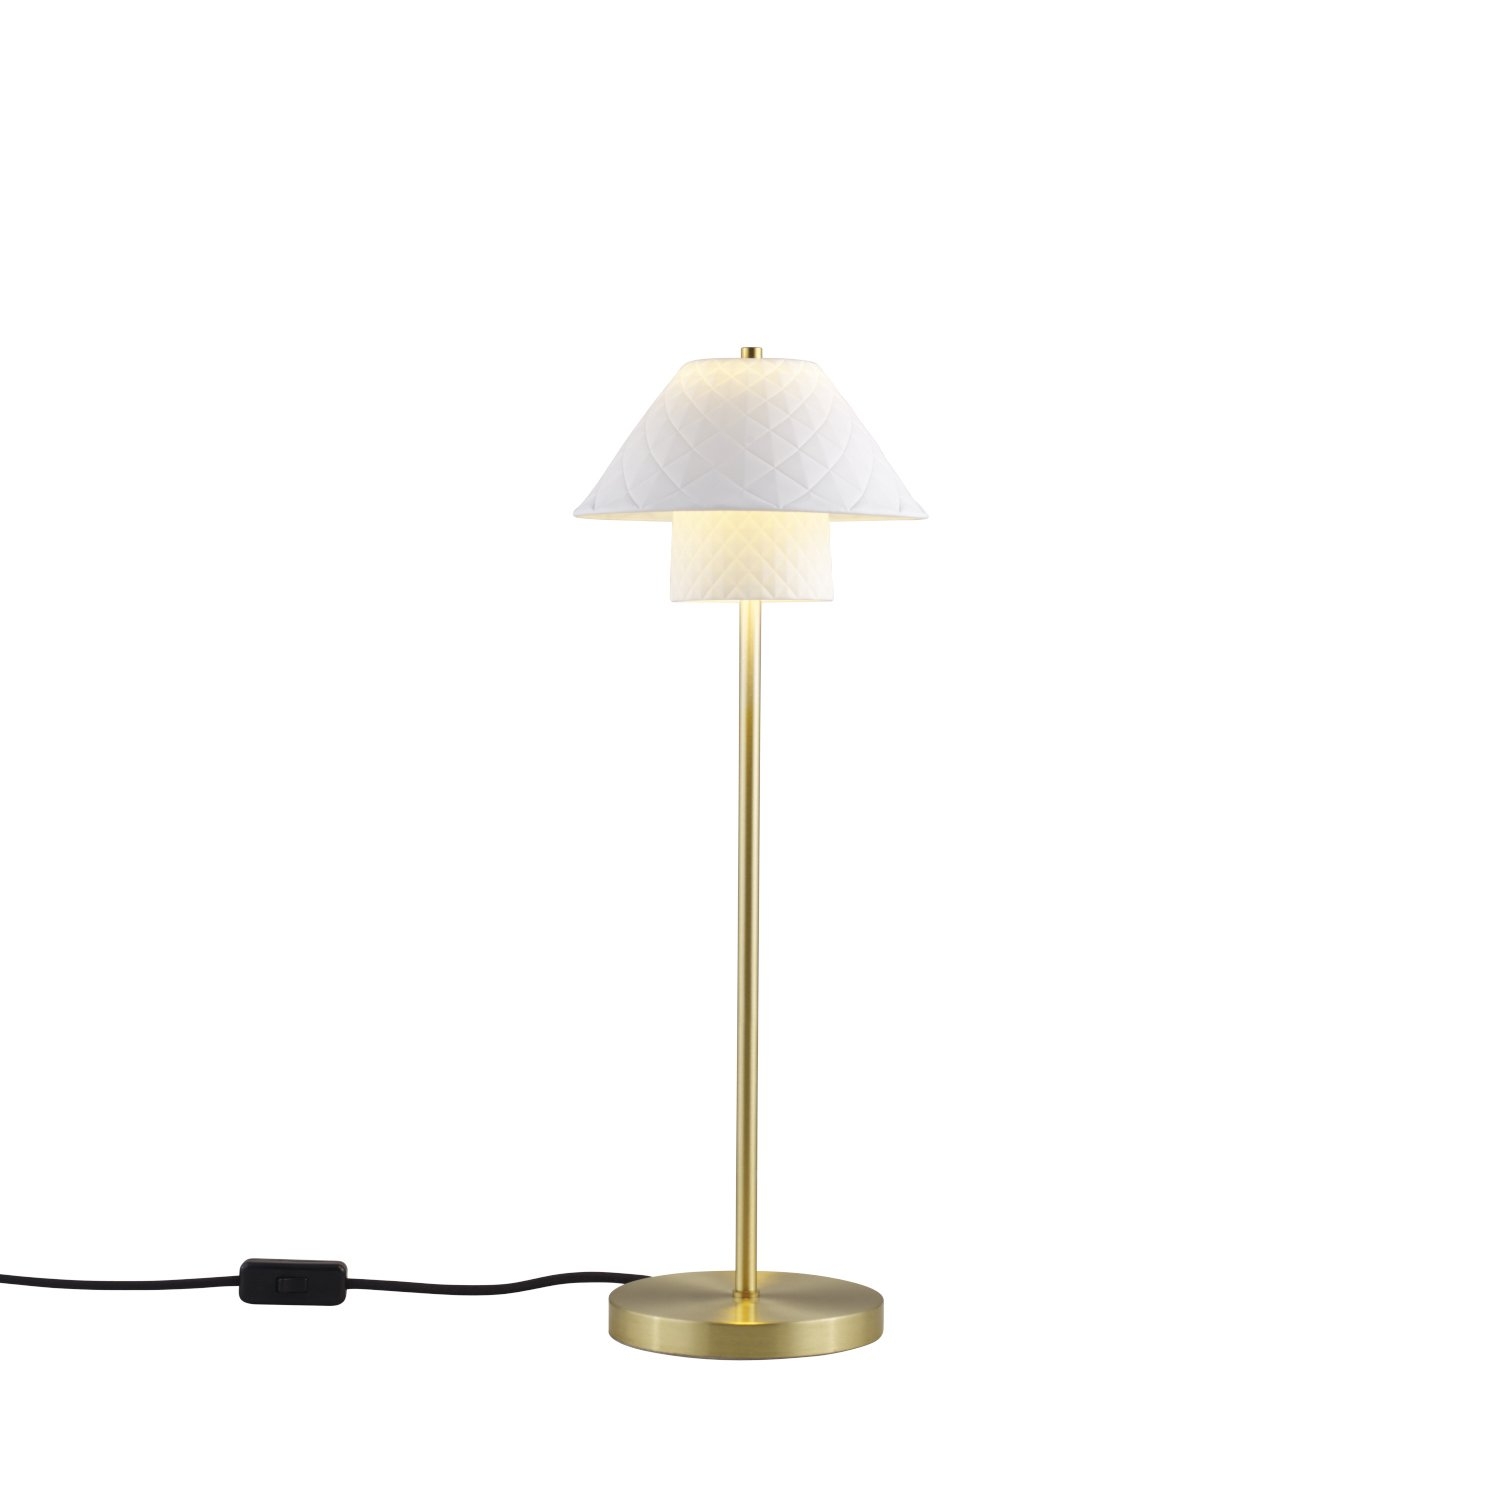 Original Btc – Oxford Double Table Light – Natural White & Satin Brass 570 X 205 mm